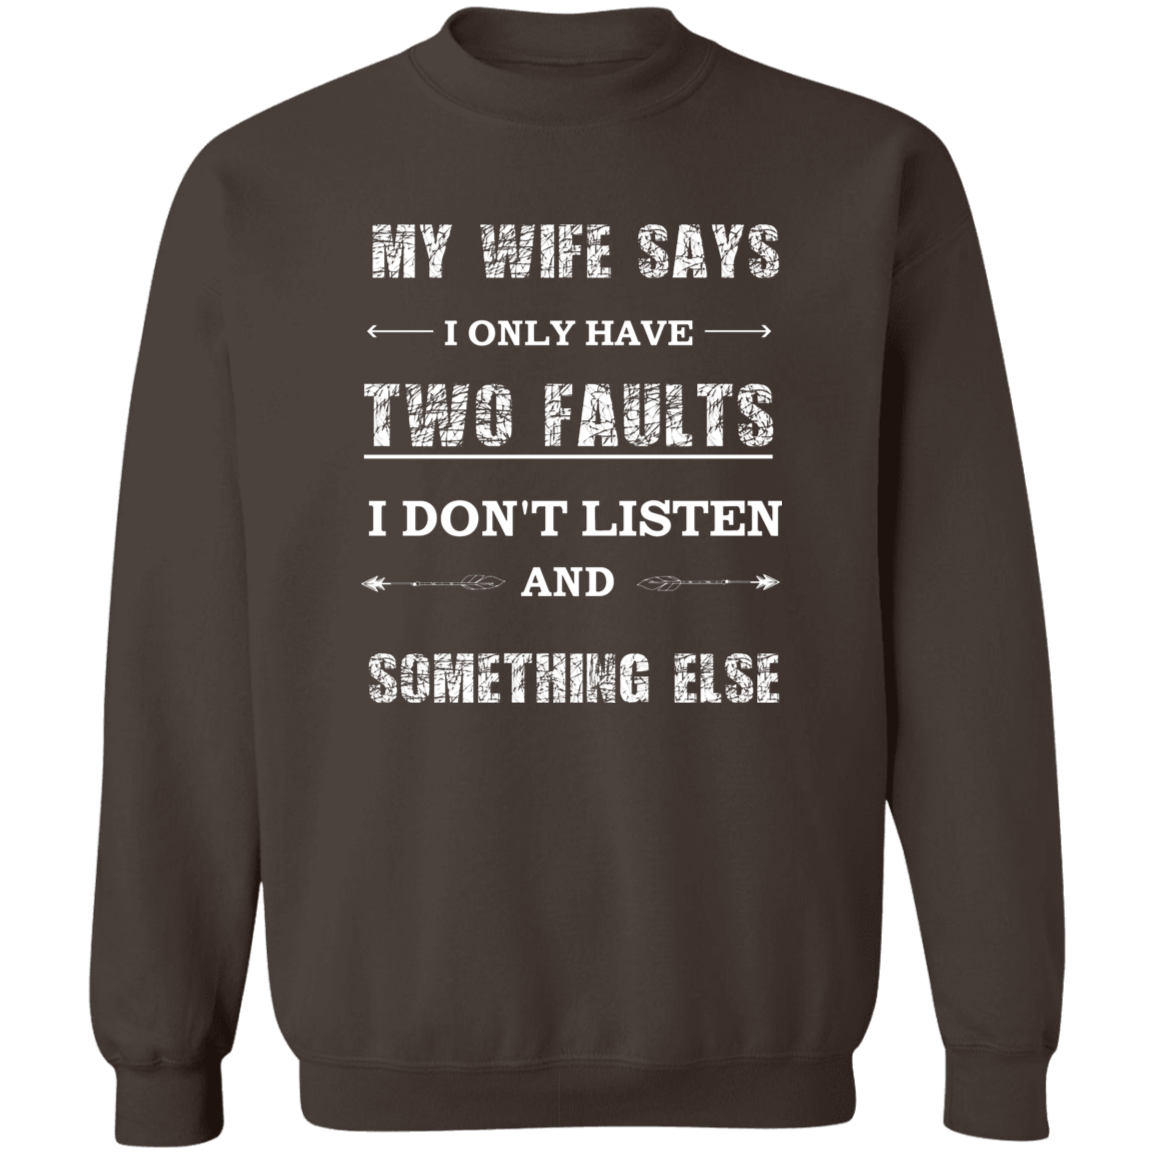 MY WIFE SAYS  Sweatshirt